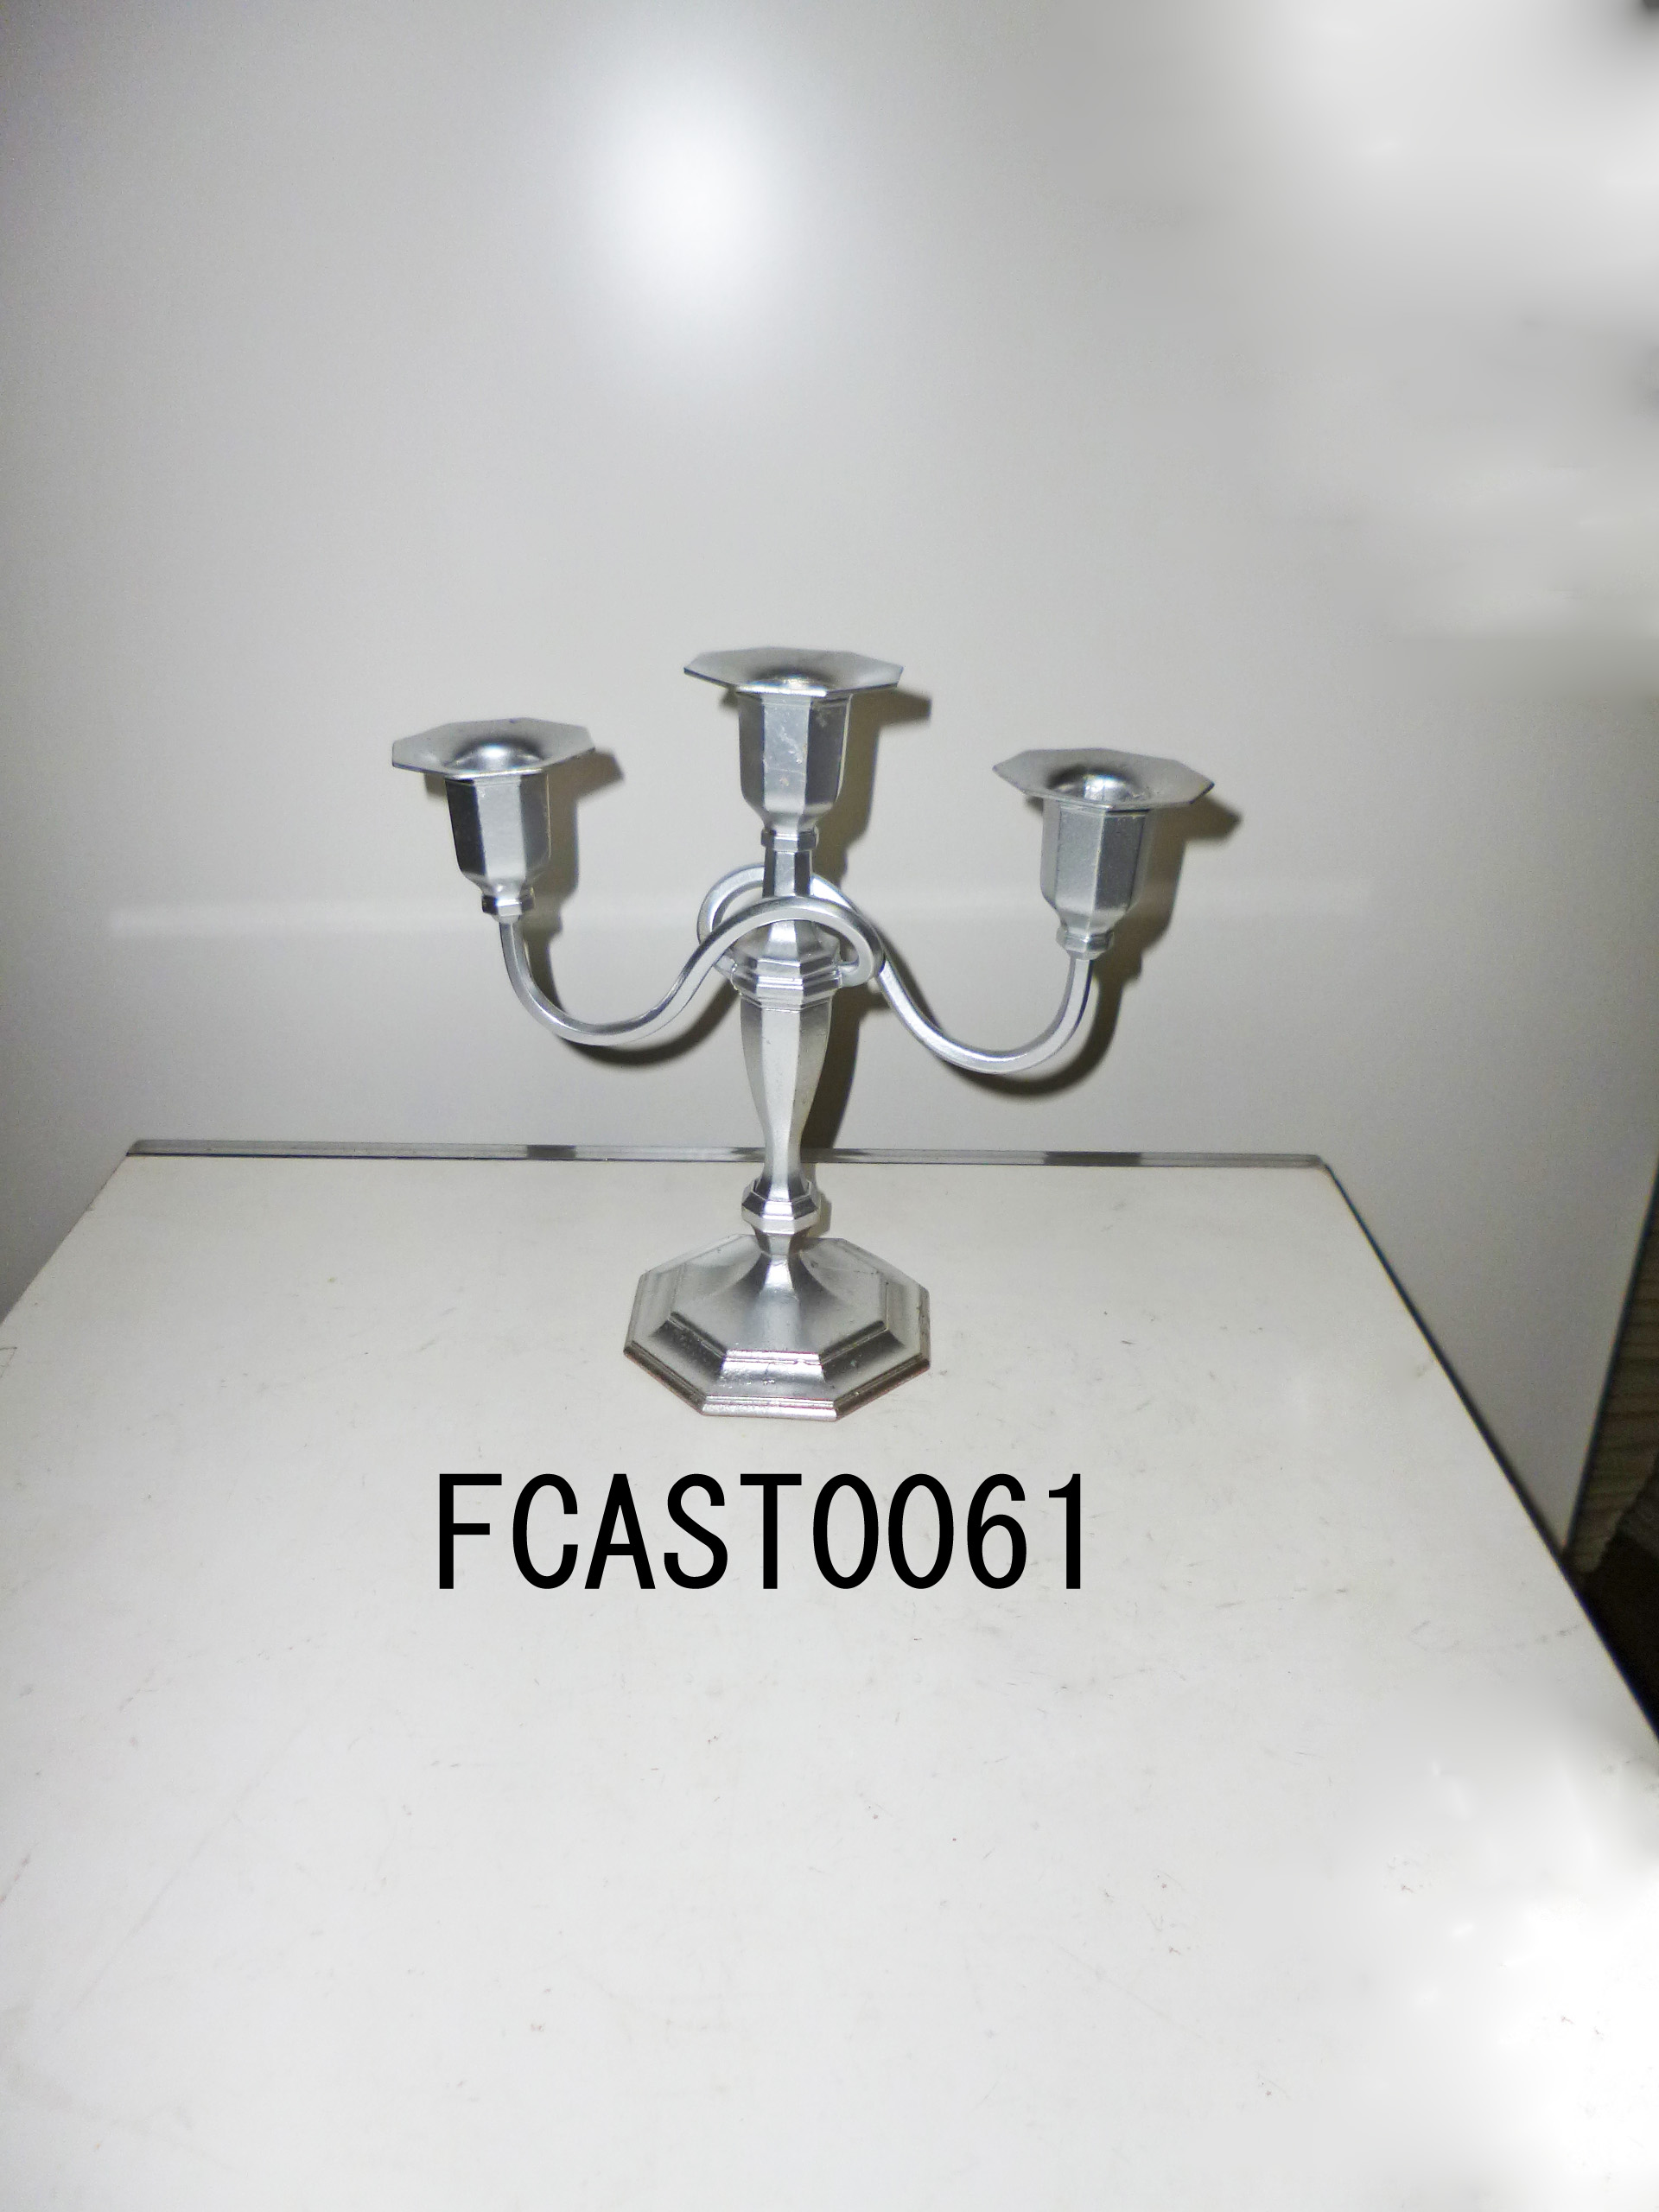 FCAST0061